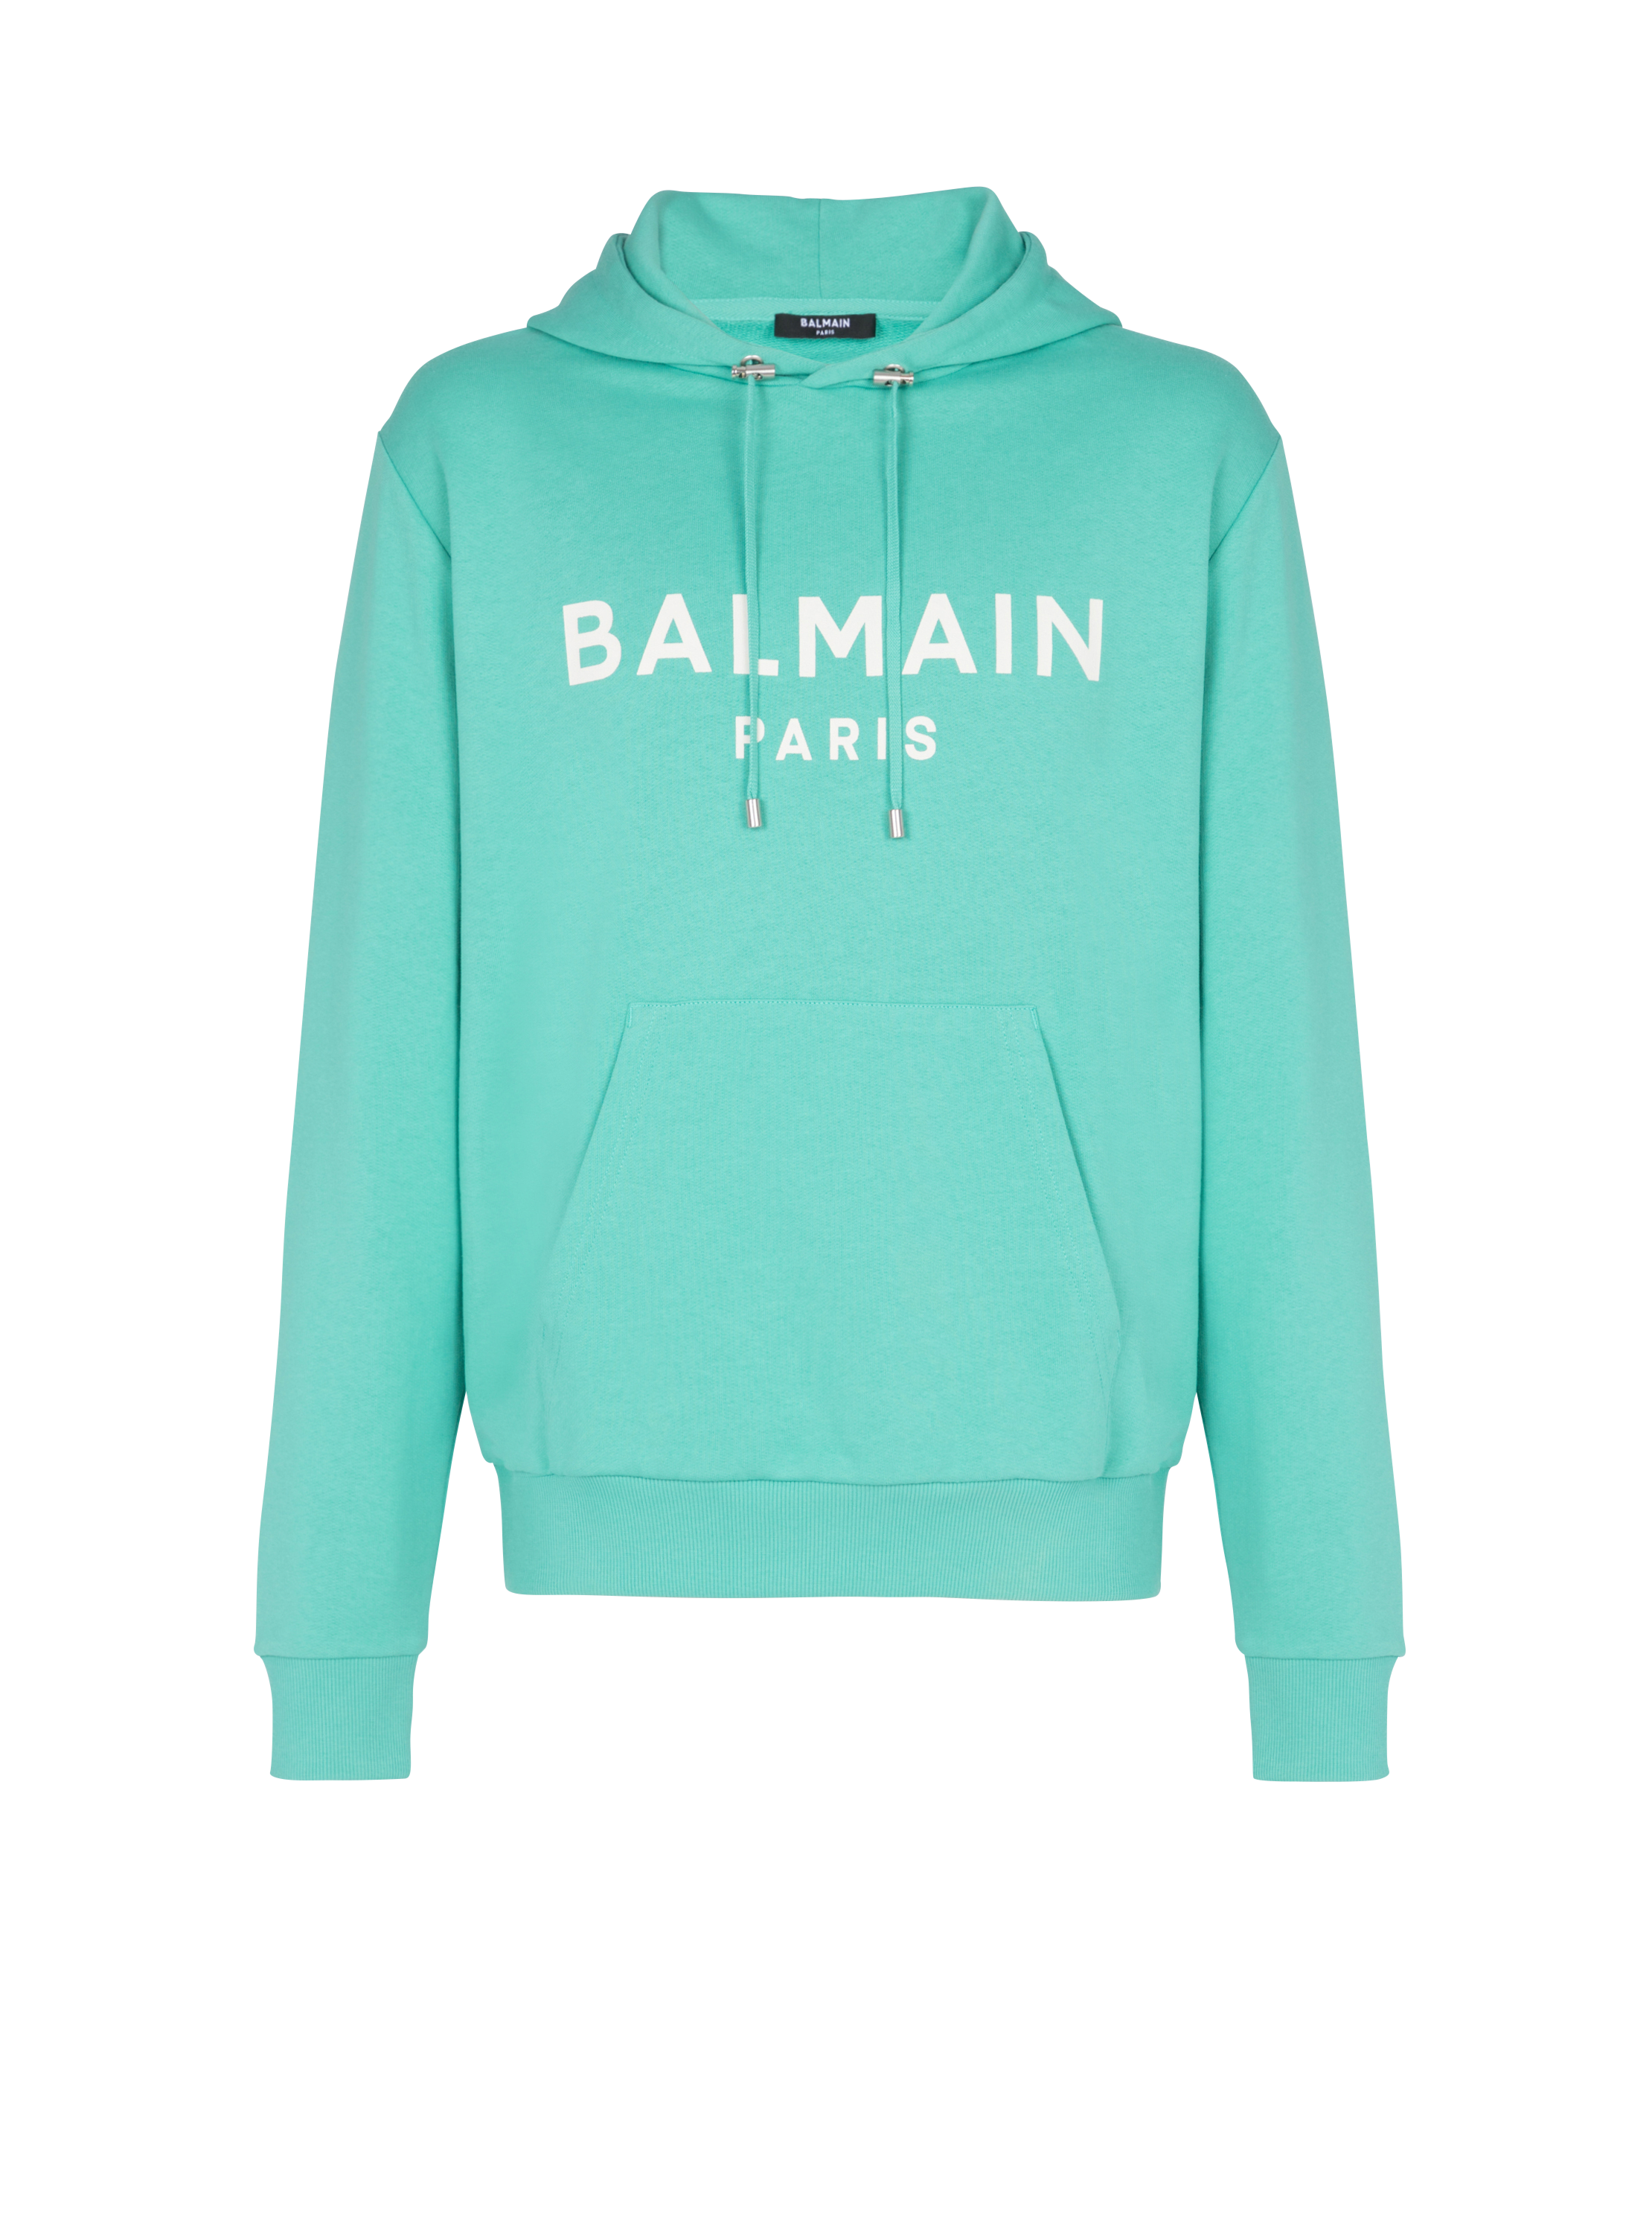 Balmain巴尔曼标志印花棉质连帽运动衫, blue, hi-res